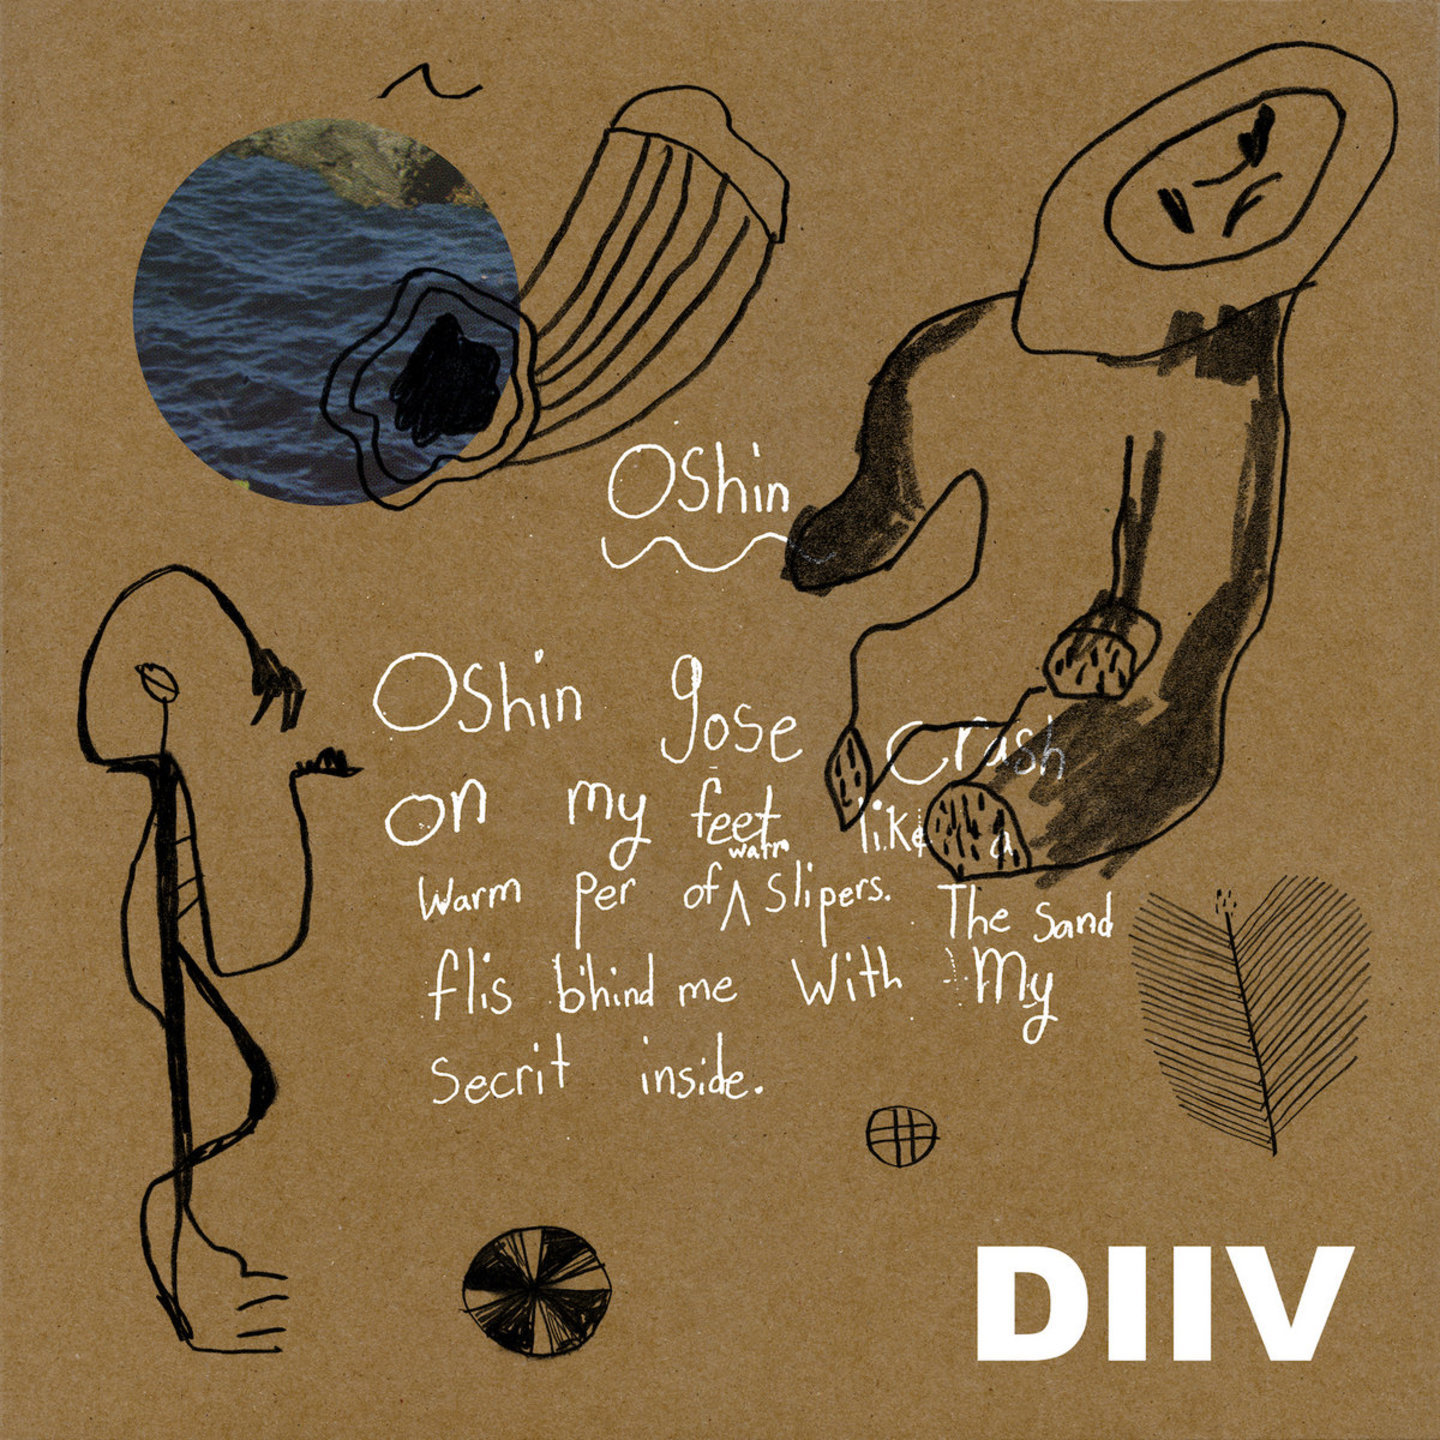 DIIV - Oshin 2xLP + Book 10th Anniversary Blue Marbled vinyl